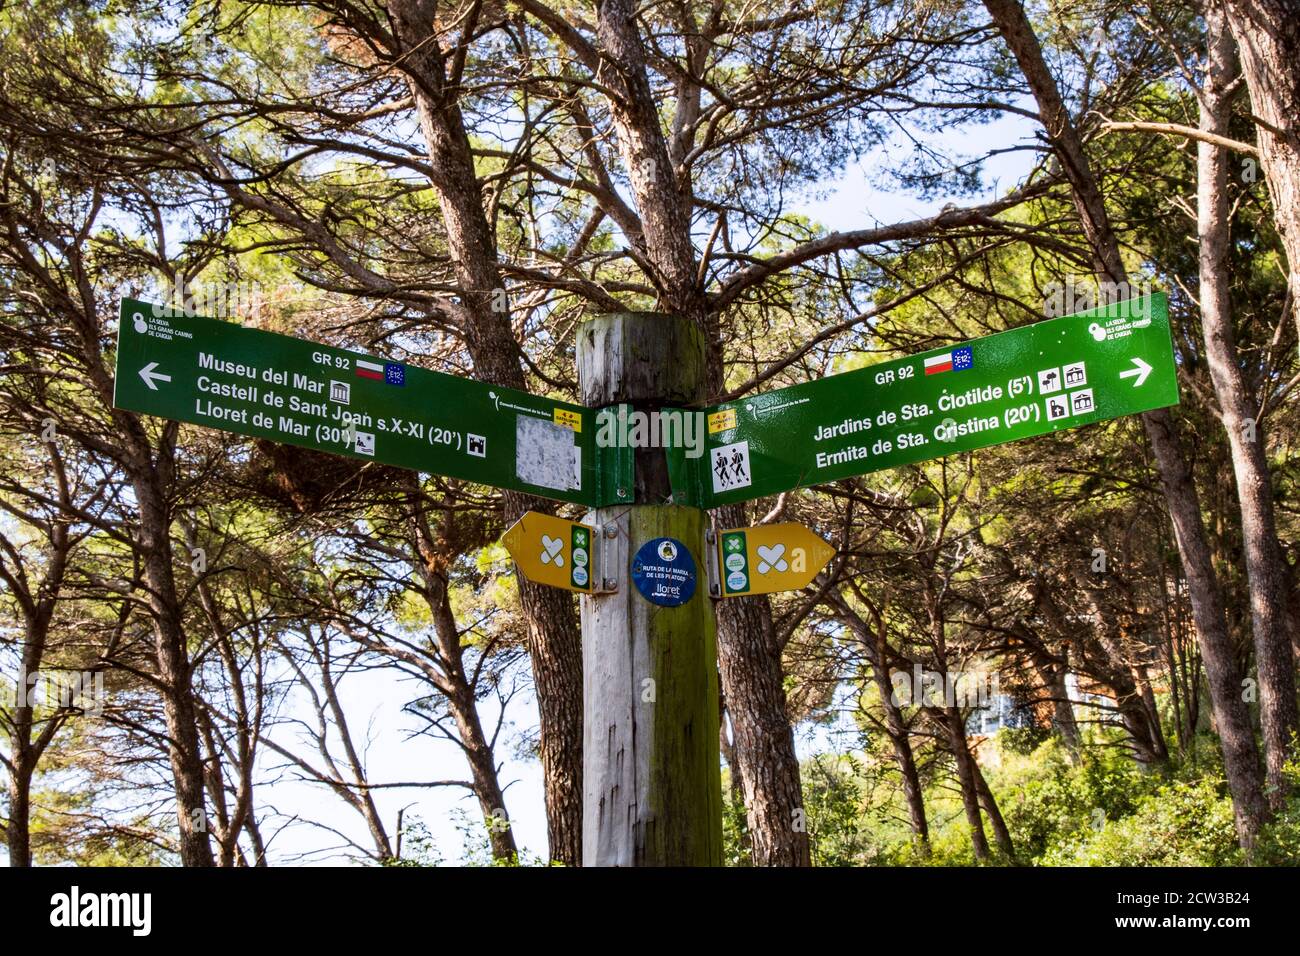 The GR92 coastal path that runs through pine forest near Lloret de Mar on the Costa Brava, Spain Stock Photo